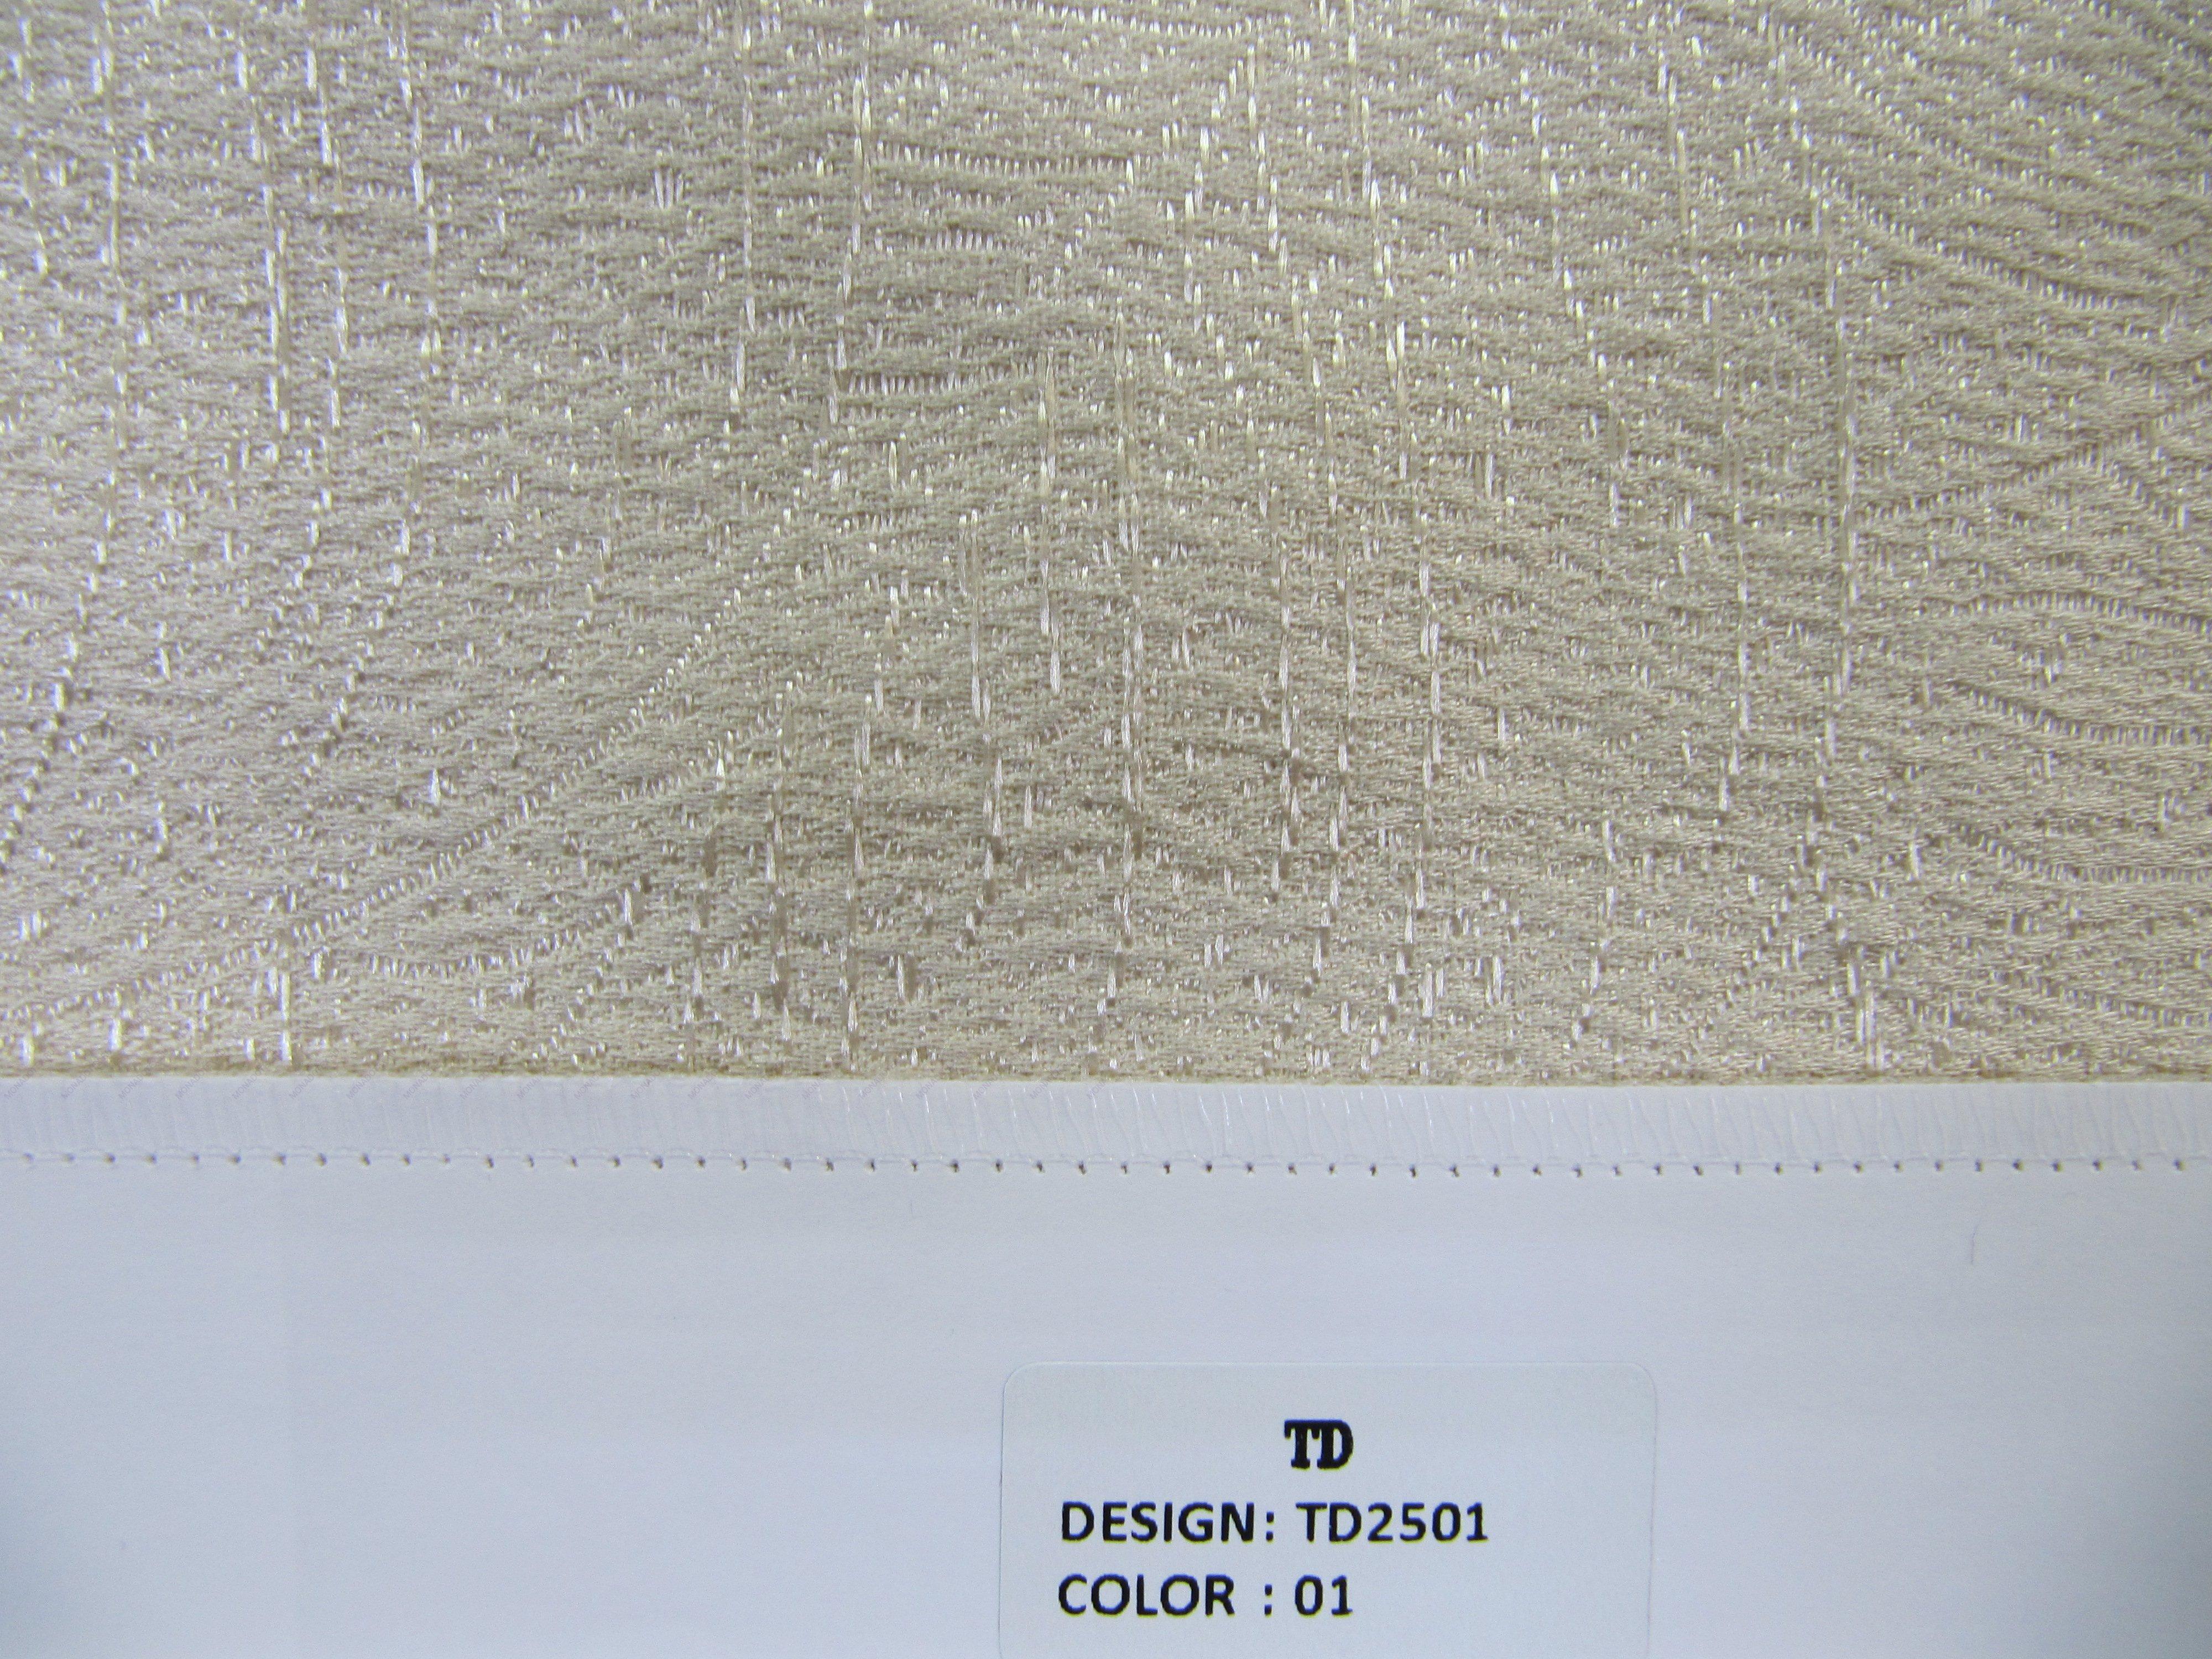 Каталог Design TD 2501 Color 01 TD COLLECTION (ТД КОЛЛЕКШЕН)